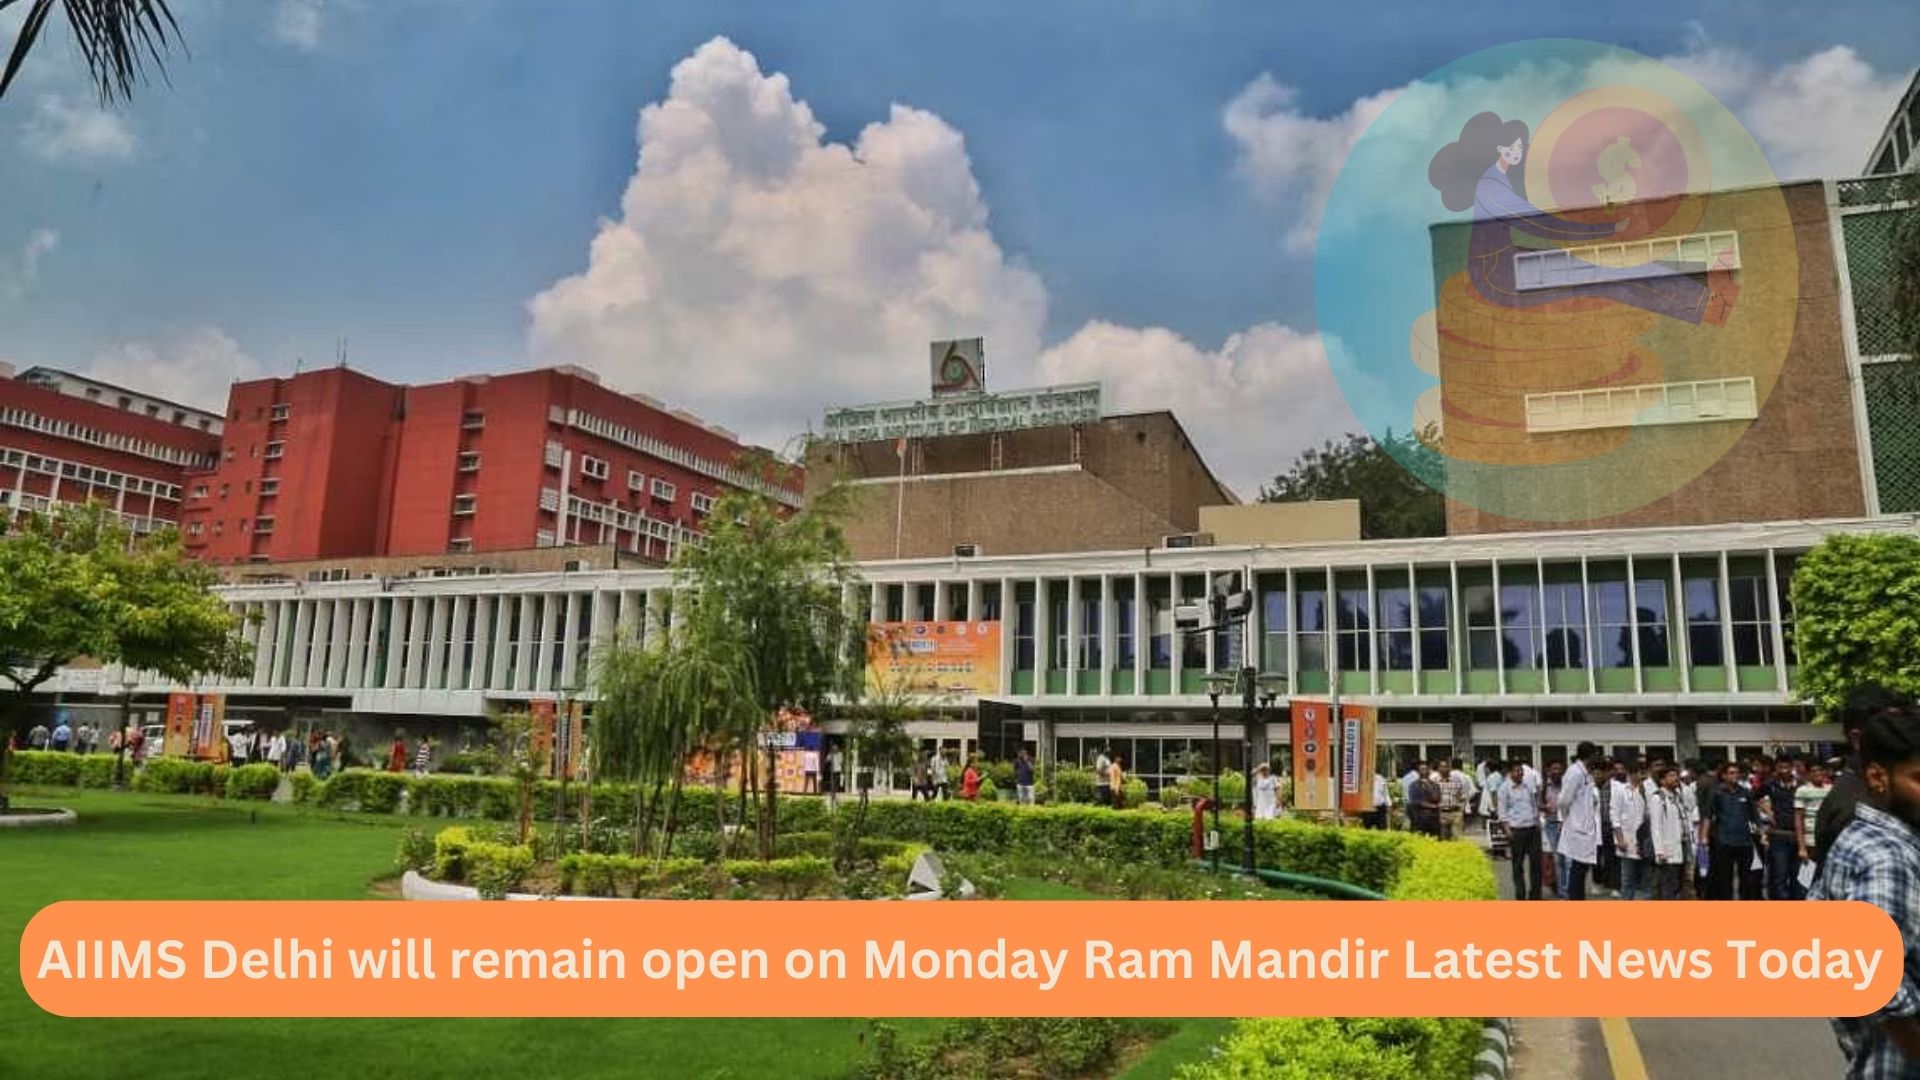 AIIMS Delhi will remain open on Monday Ram Mandir Latest News Today